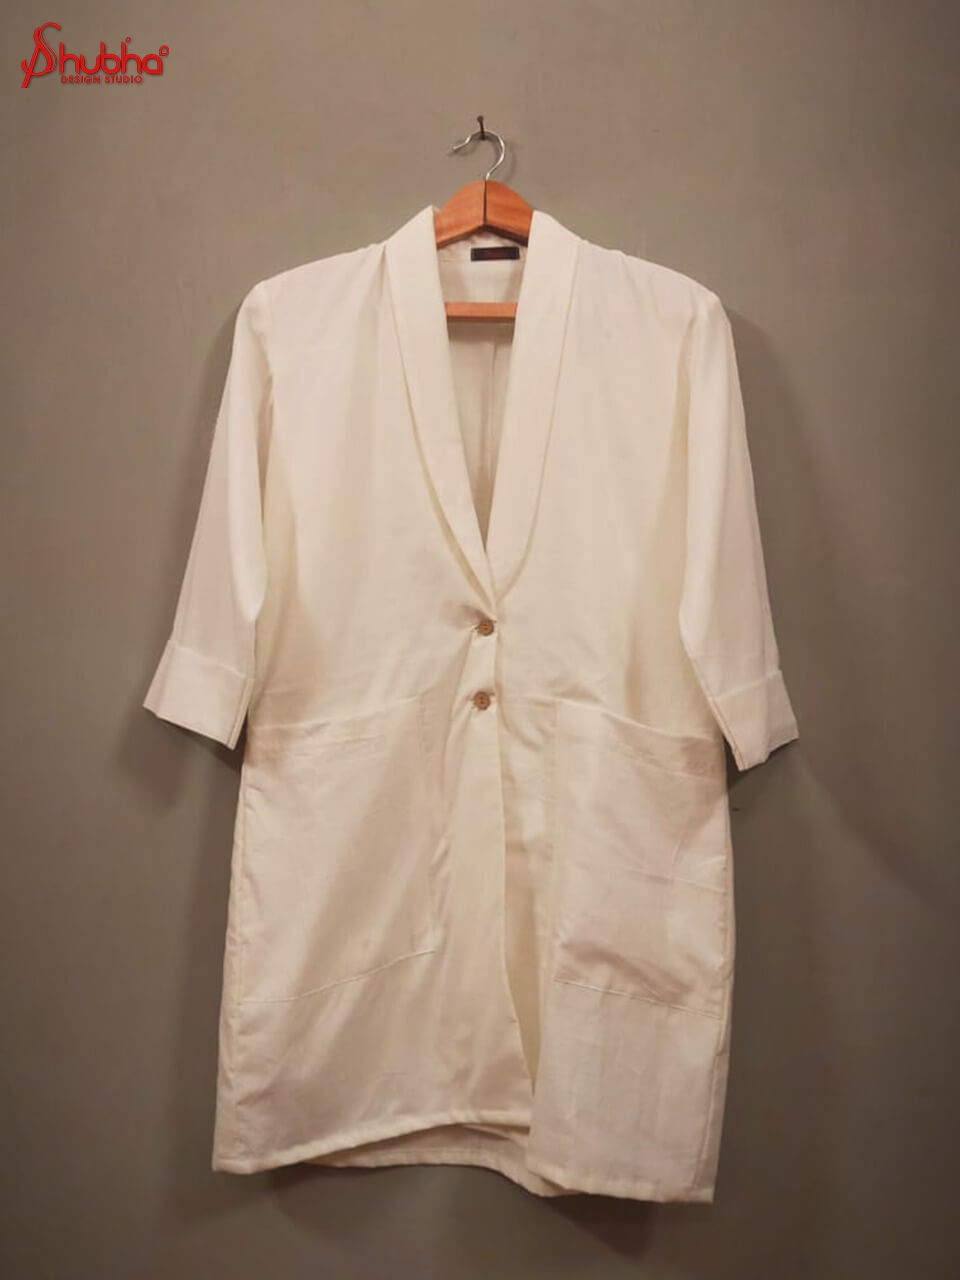 Organic cotton white jacket style shirt